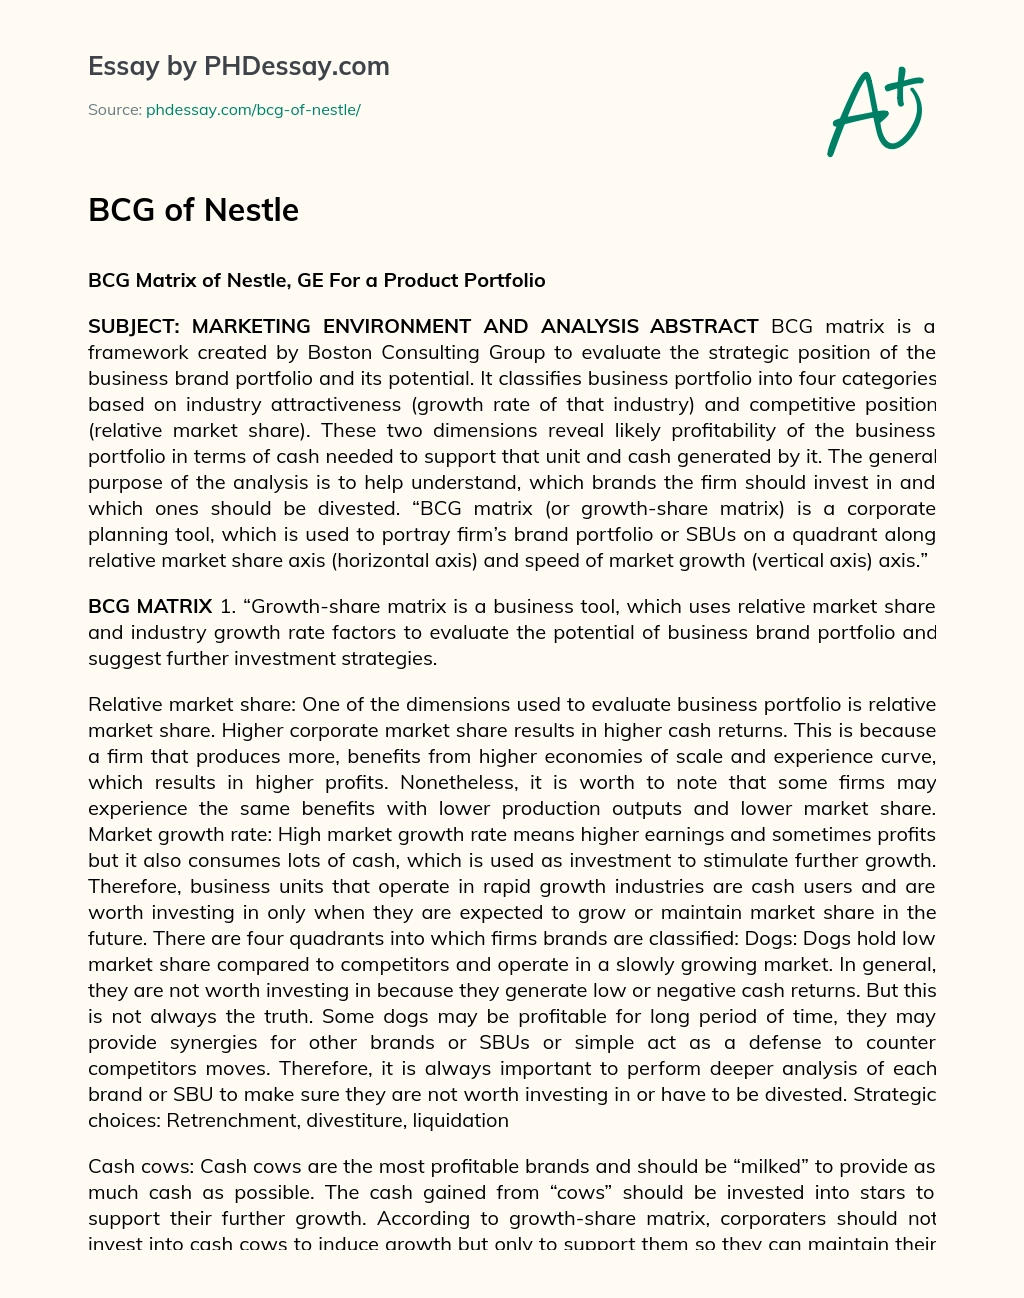 BCG Matrix of Nestle, GE For a Product Portfolio essay